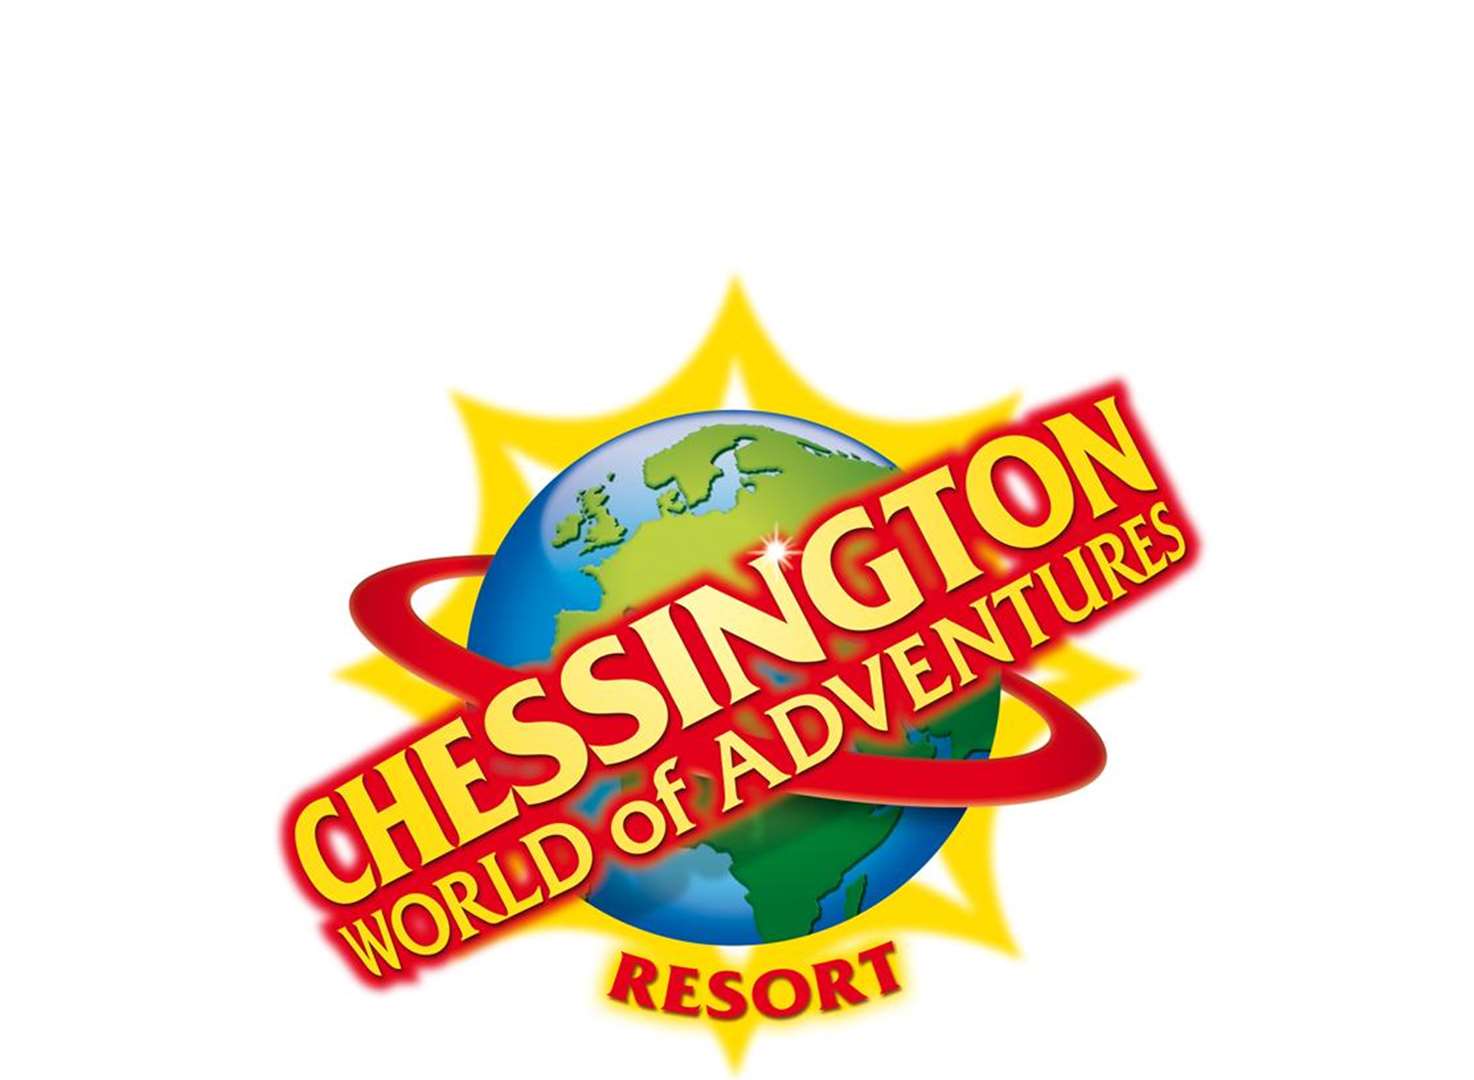 chessington world of adventures resort logo